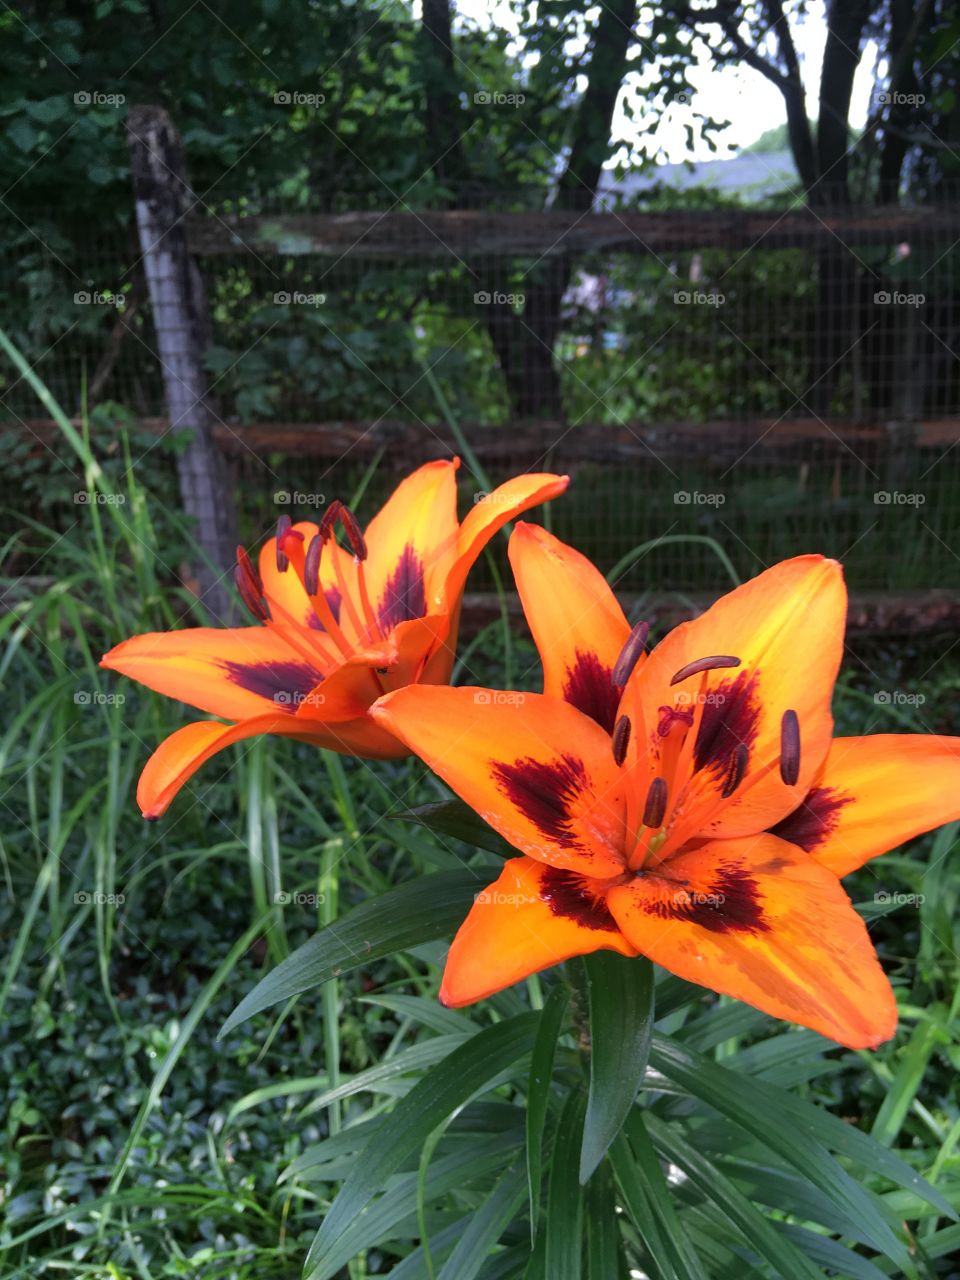 Nice shot of orange lilies 